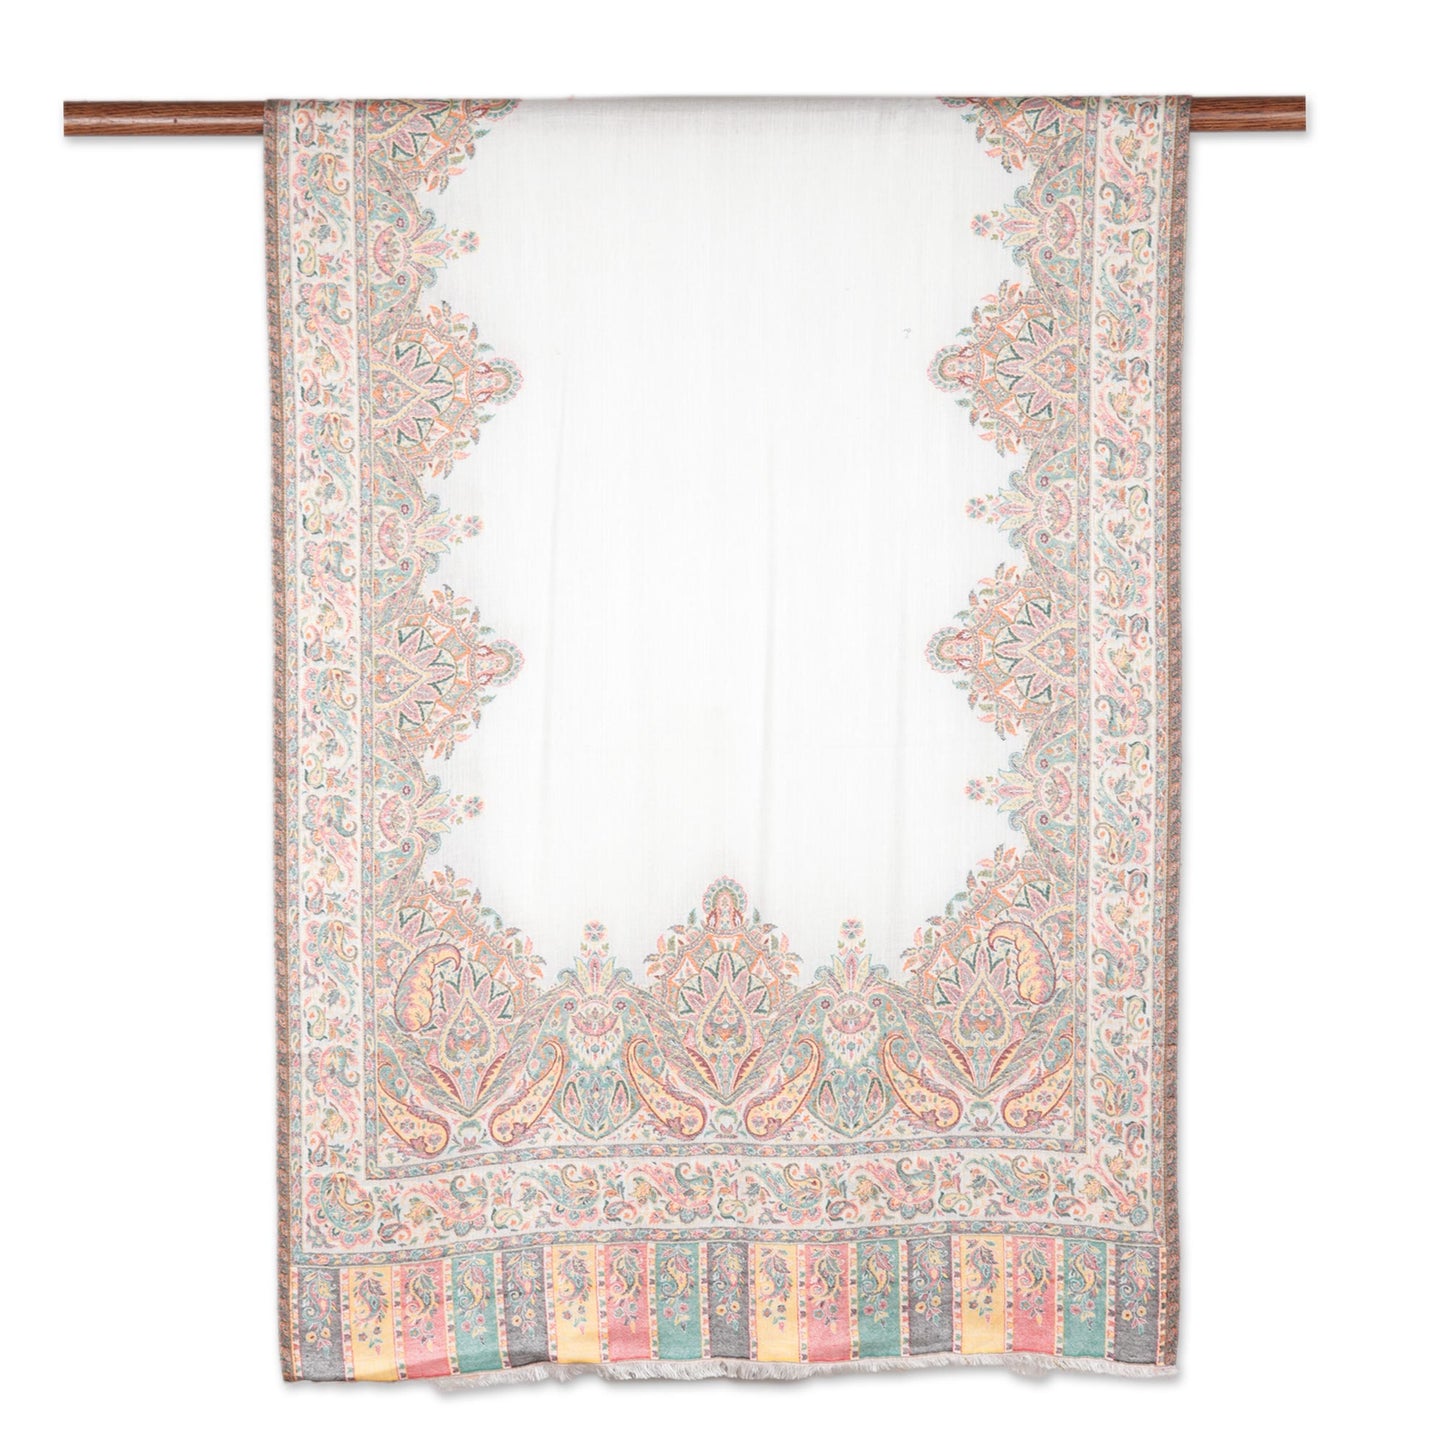 Mughal Fresco Modal Woven Shawl White with Multicolored Motifs